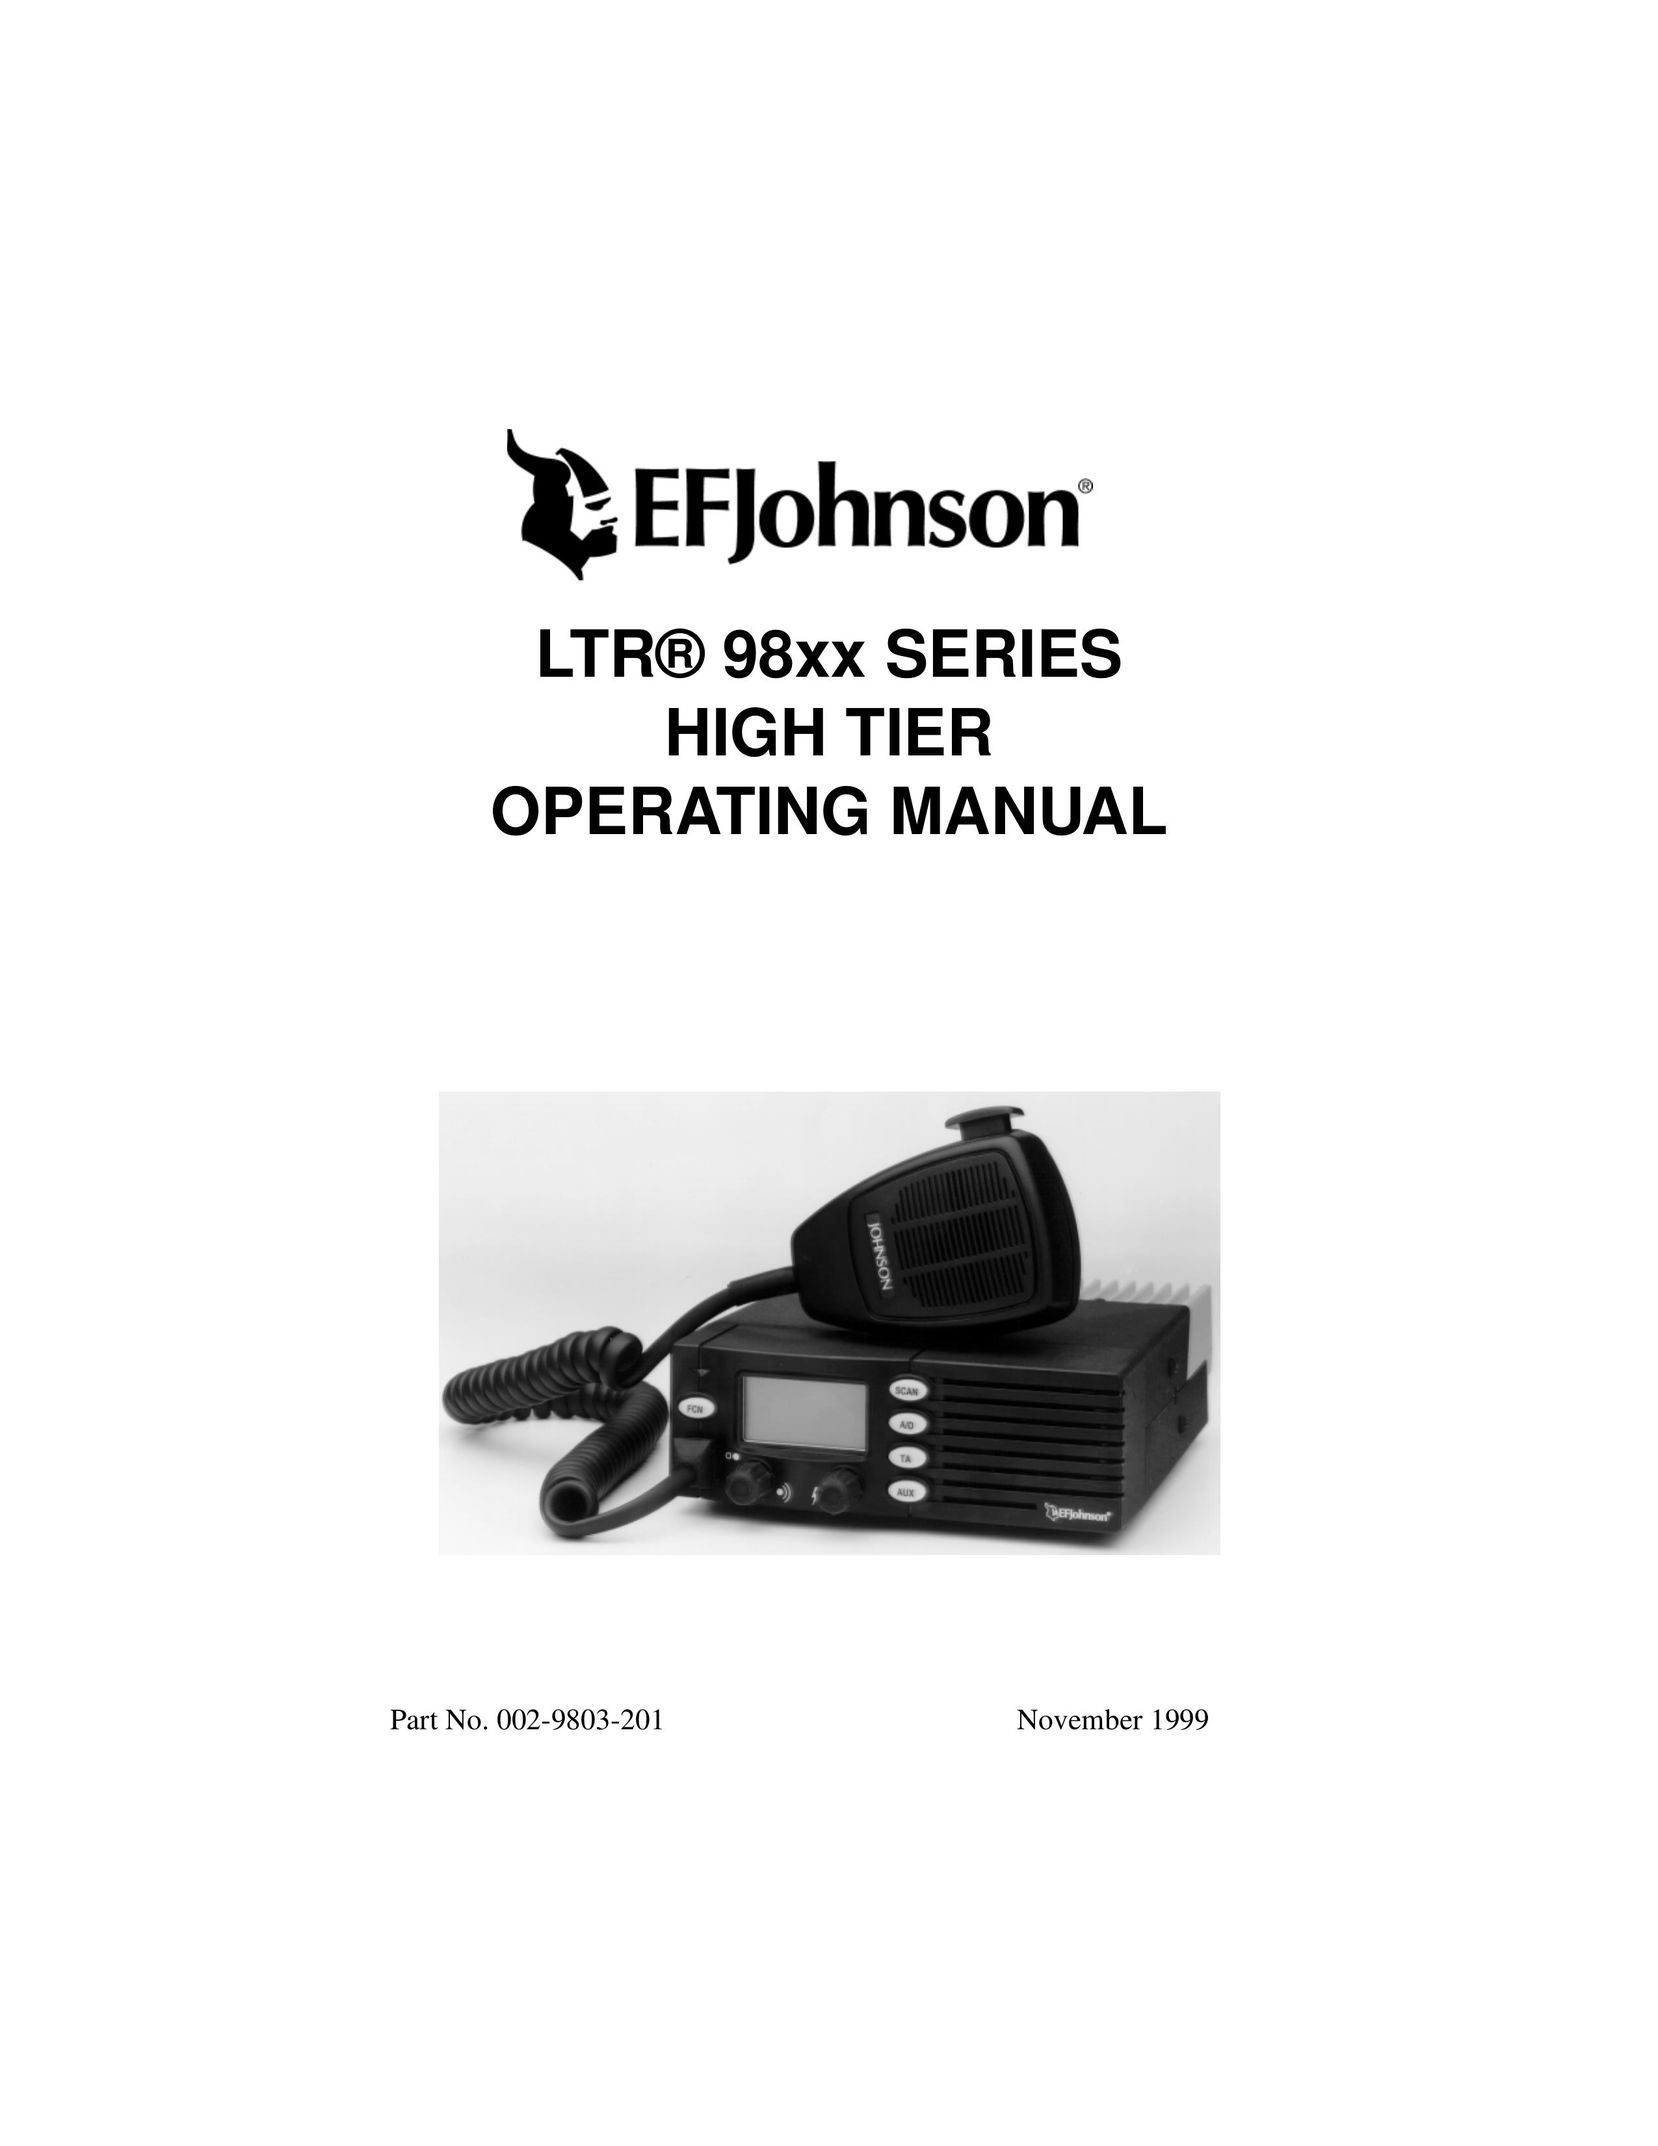 EFJohnson LTR 98xx Two-Way Radio User Manual